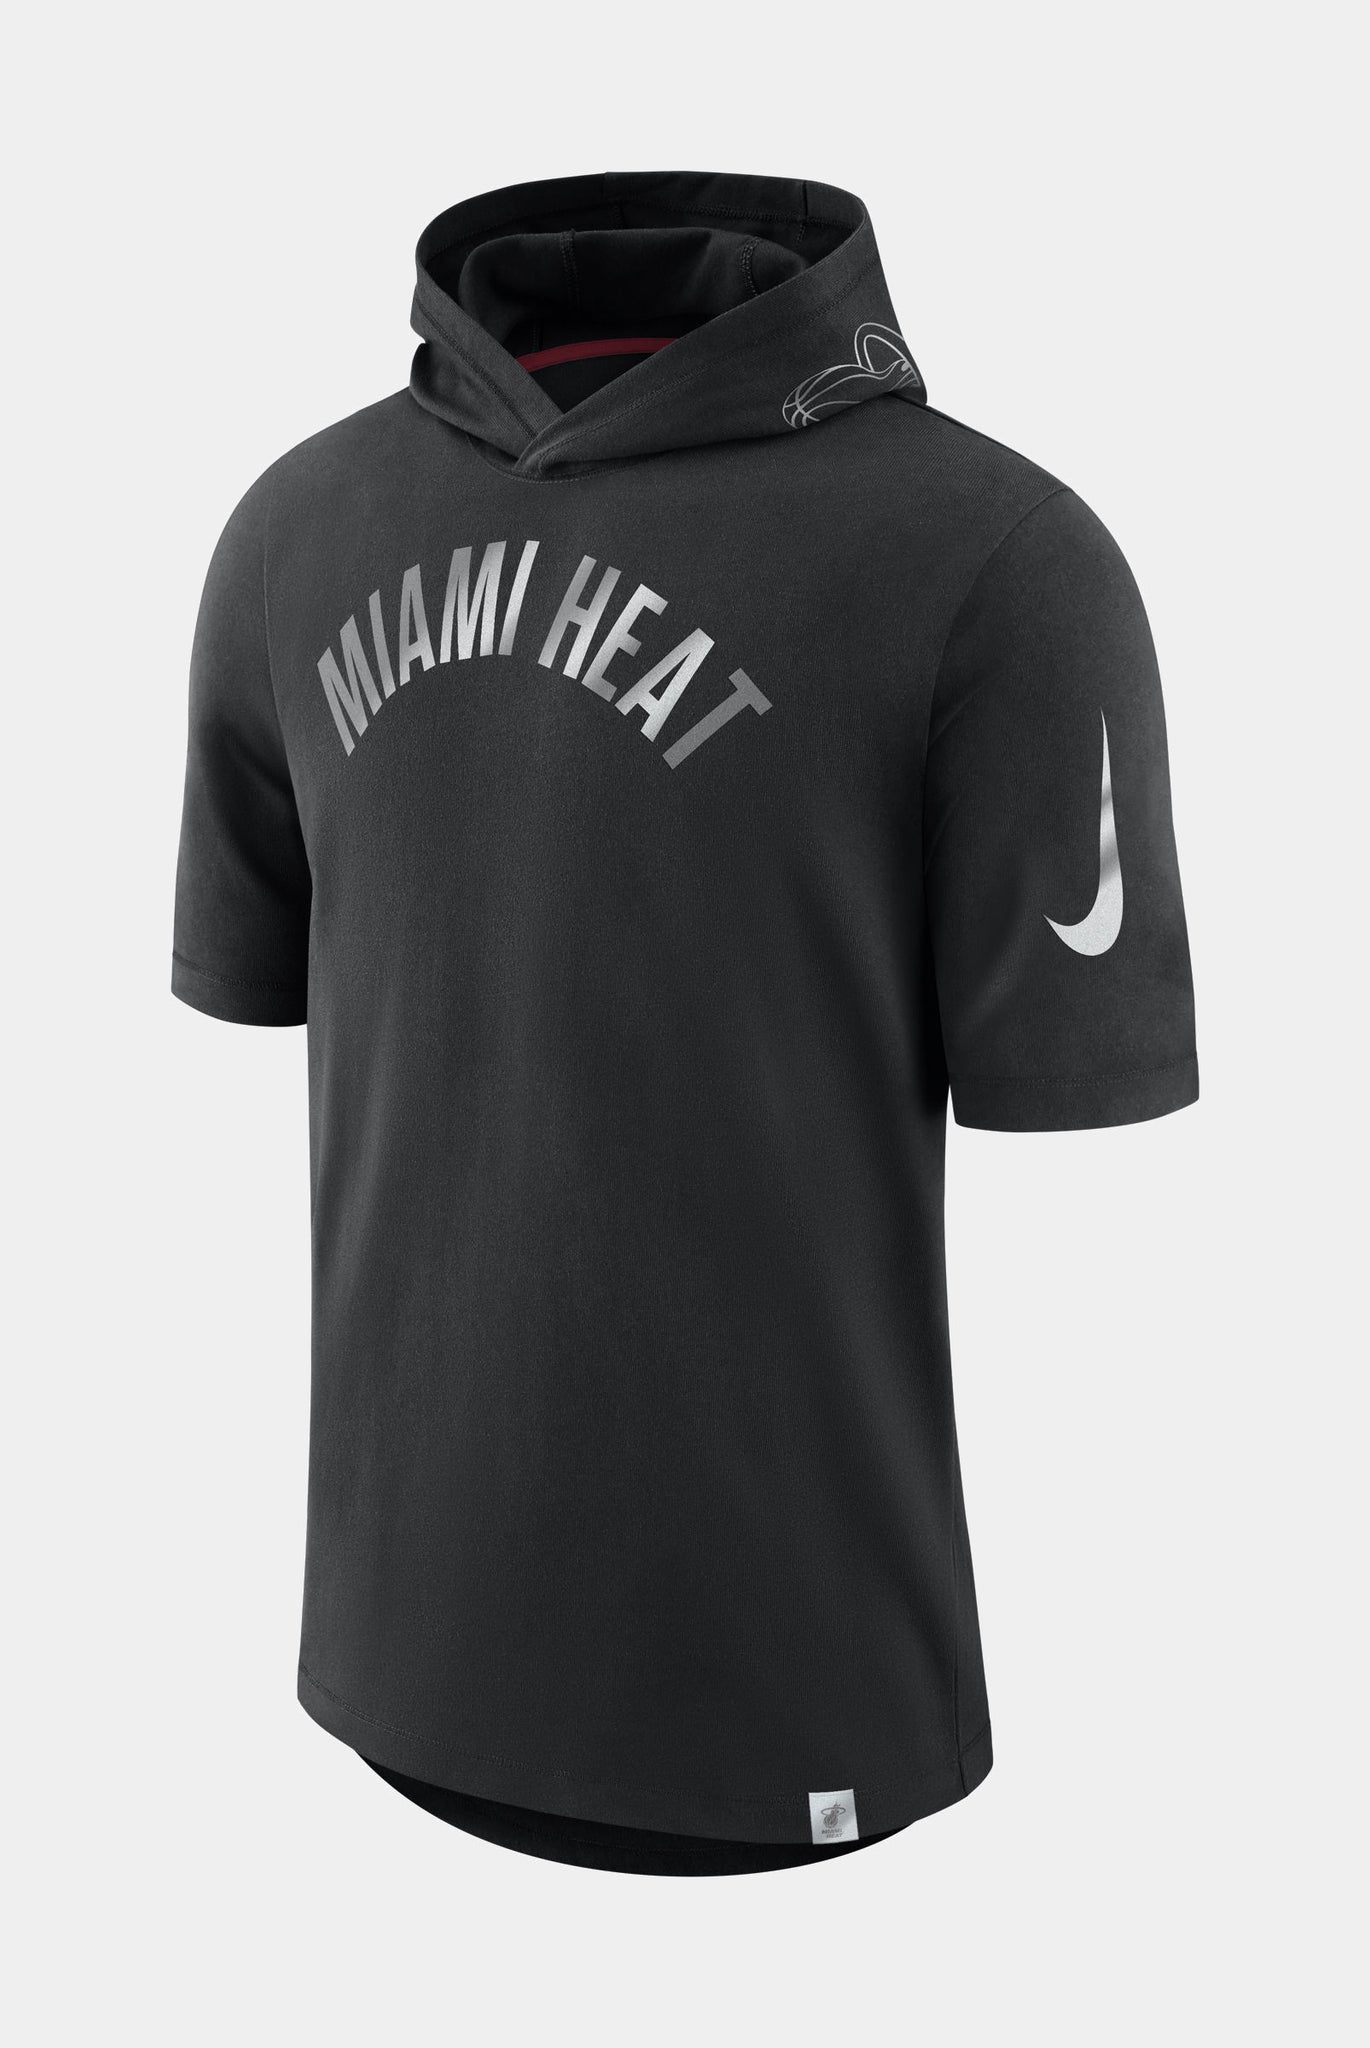 Nike Miami Heat Courtside Hoodie Black